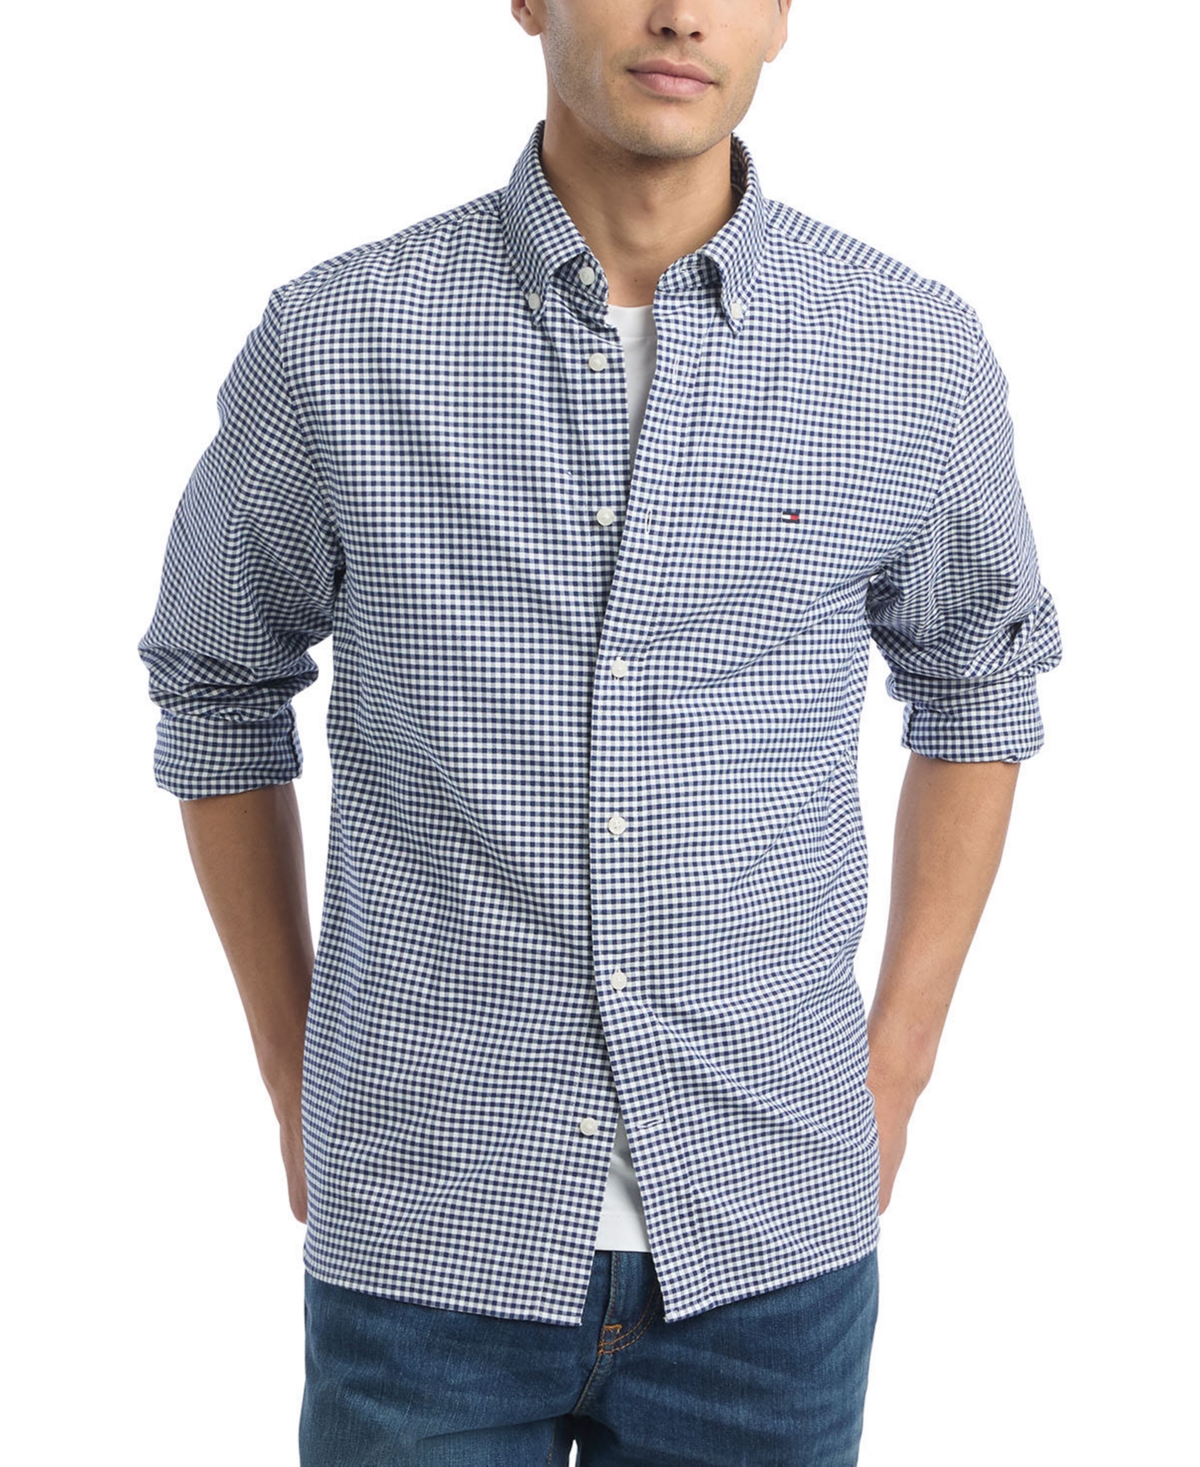 Men's Gingham Long Sleeve Button-Down Oxford Shirt - Cloudy Blue